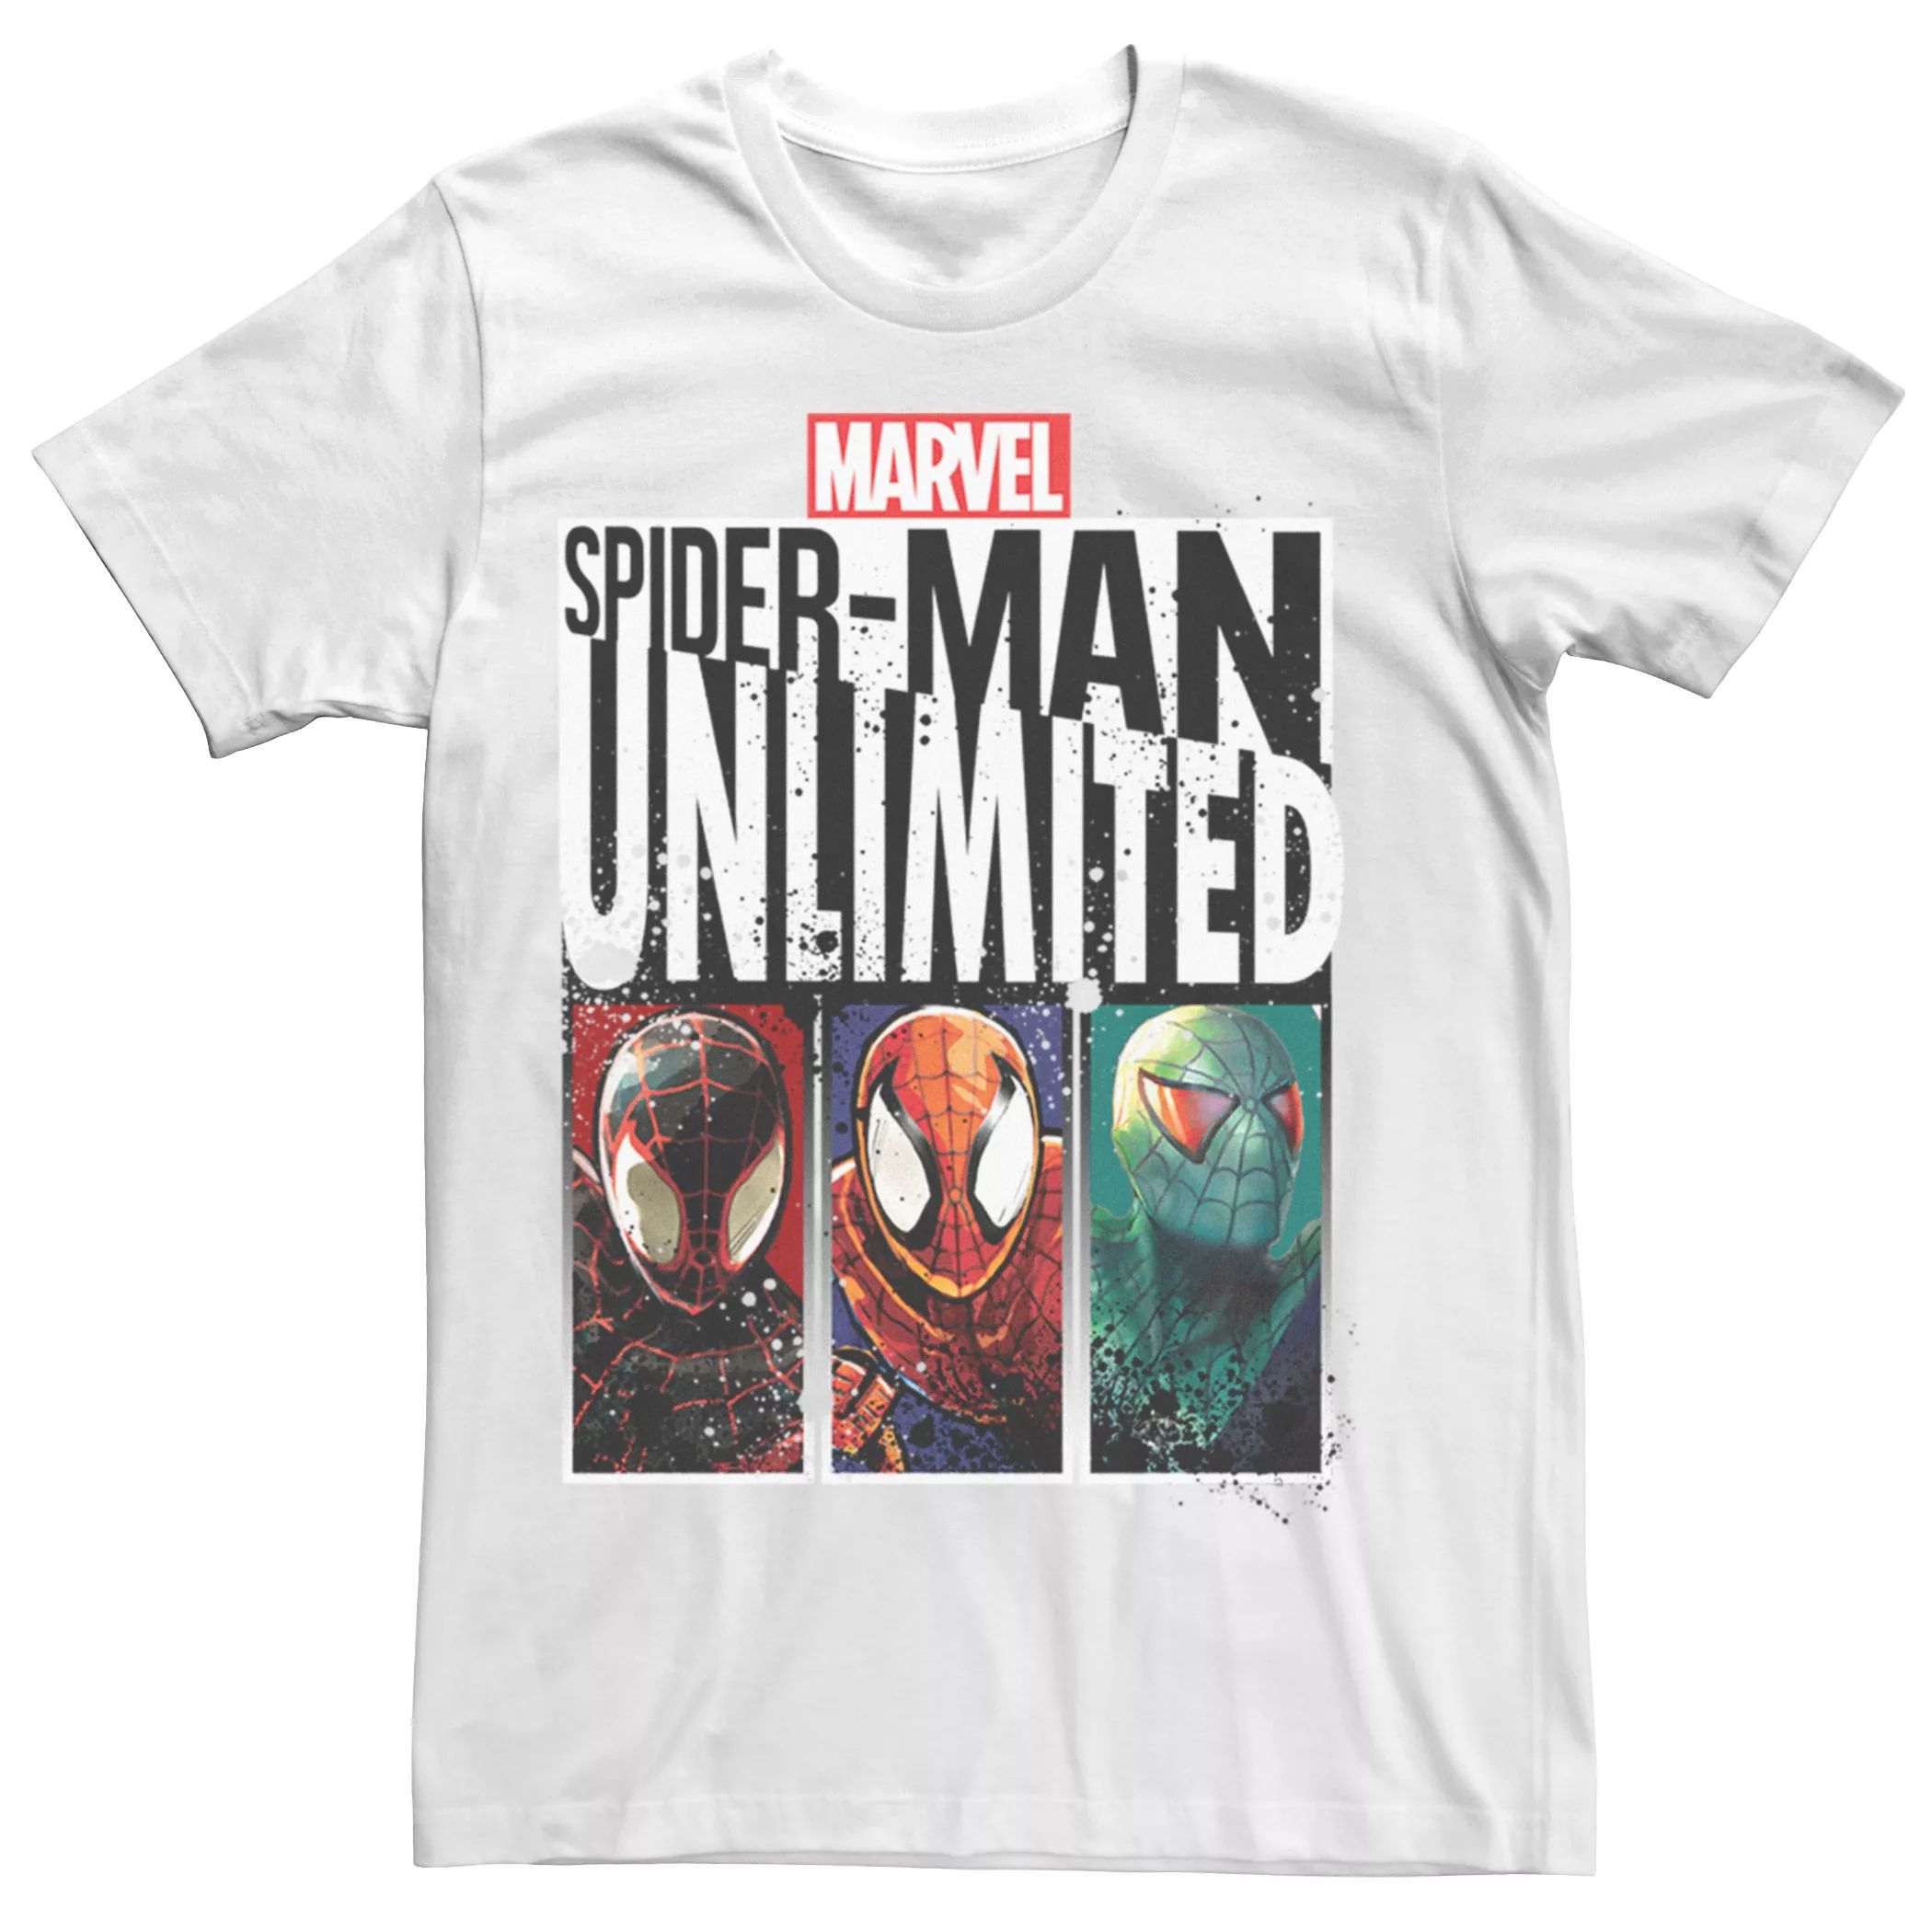 Мужская футболка с рисунком Marvel Spider-Man Unlimited Licensed Character